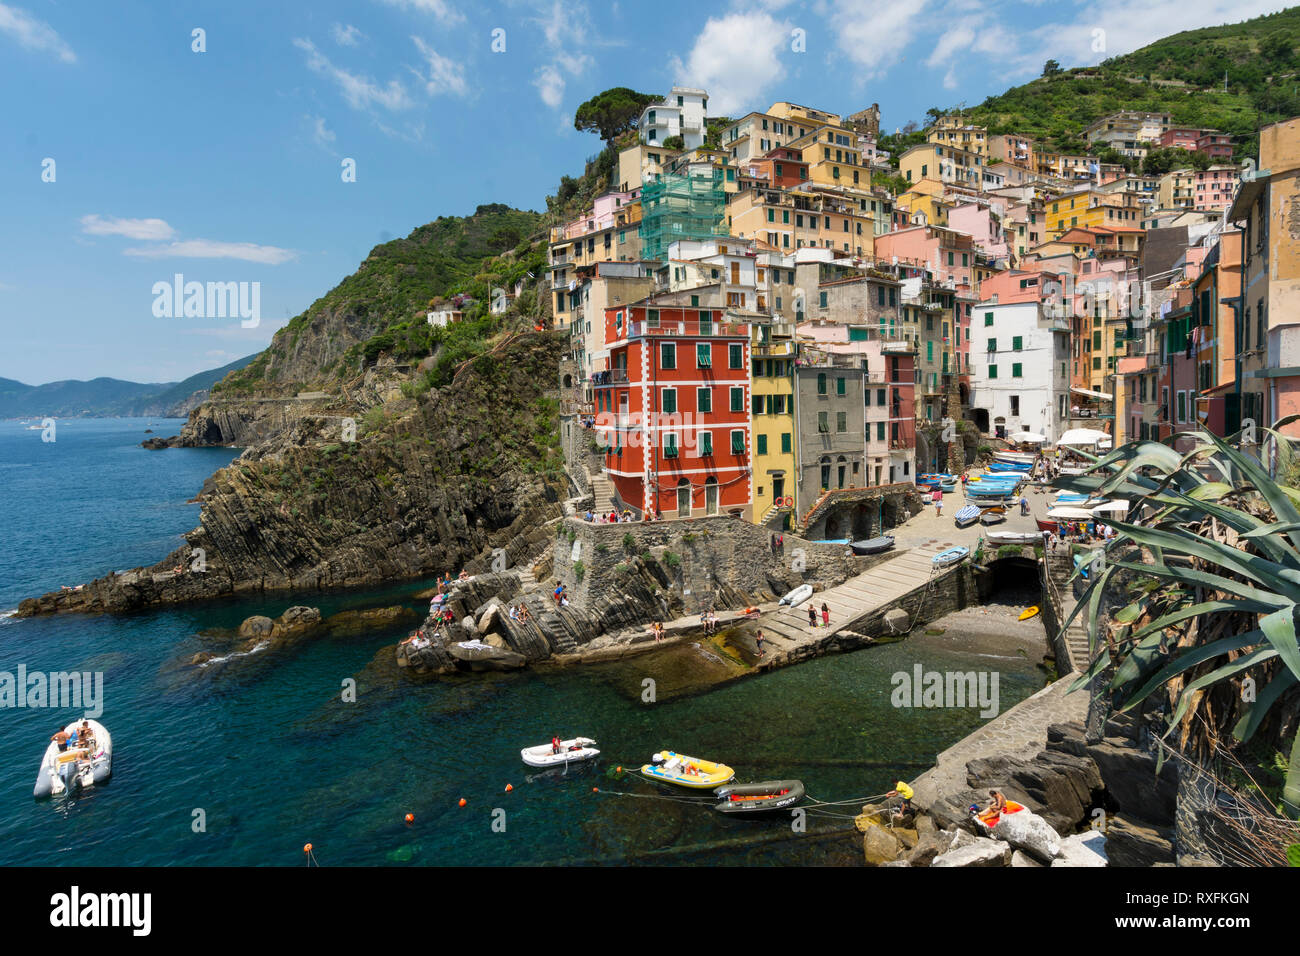 Riomaggiore, a village and comune in the province of La Spezia, situated in a small valley in the Liguria region of Italy Stock Photo